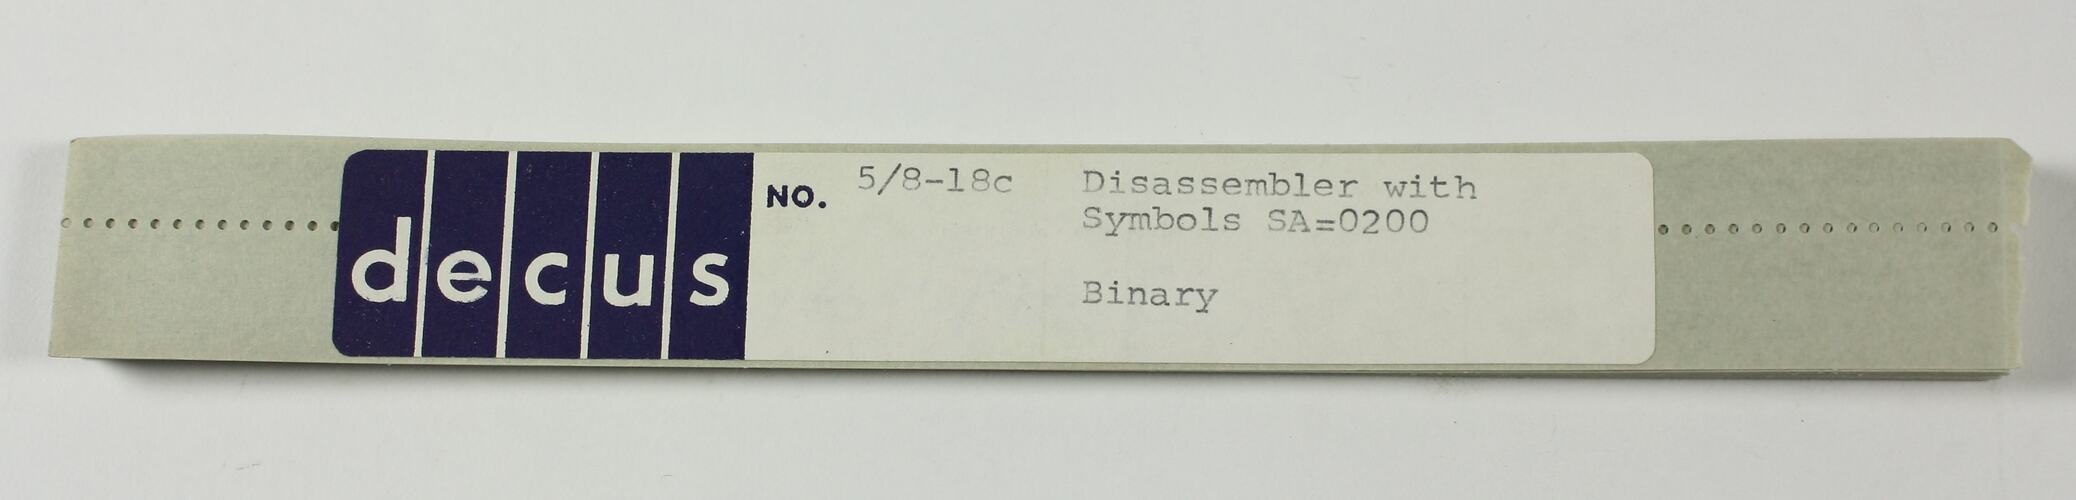 Paper Tape - DECUS, '5/8-18c Disassembler with Symbols, SA=0200, Binary'